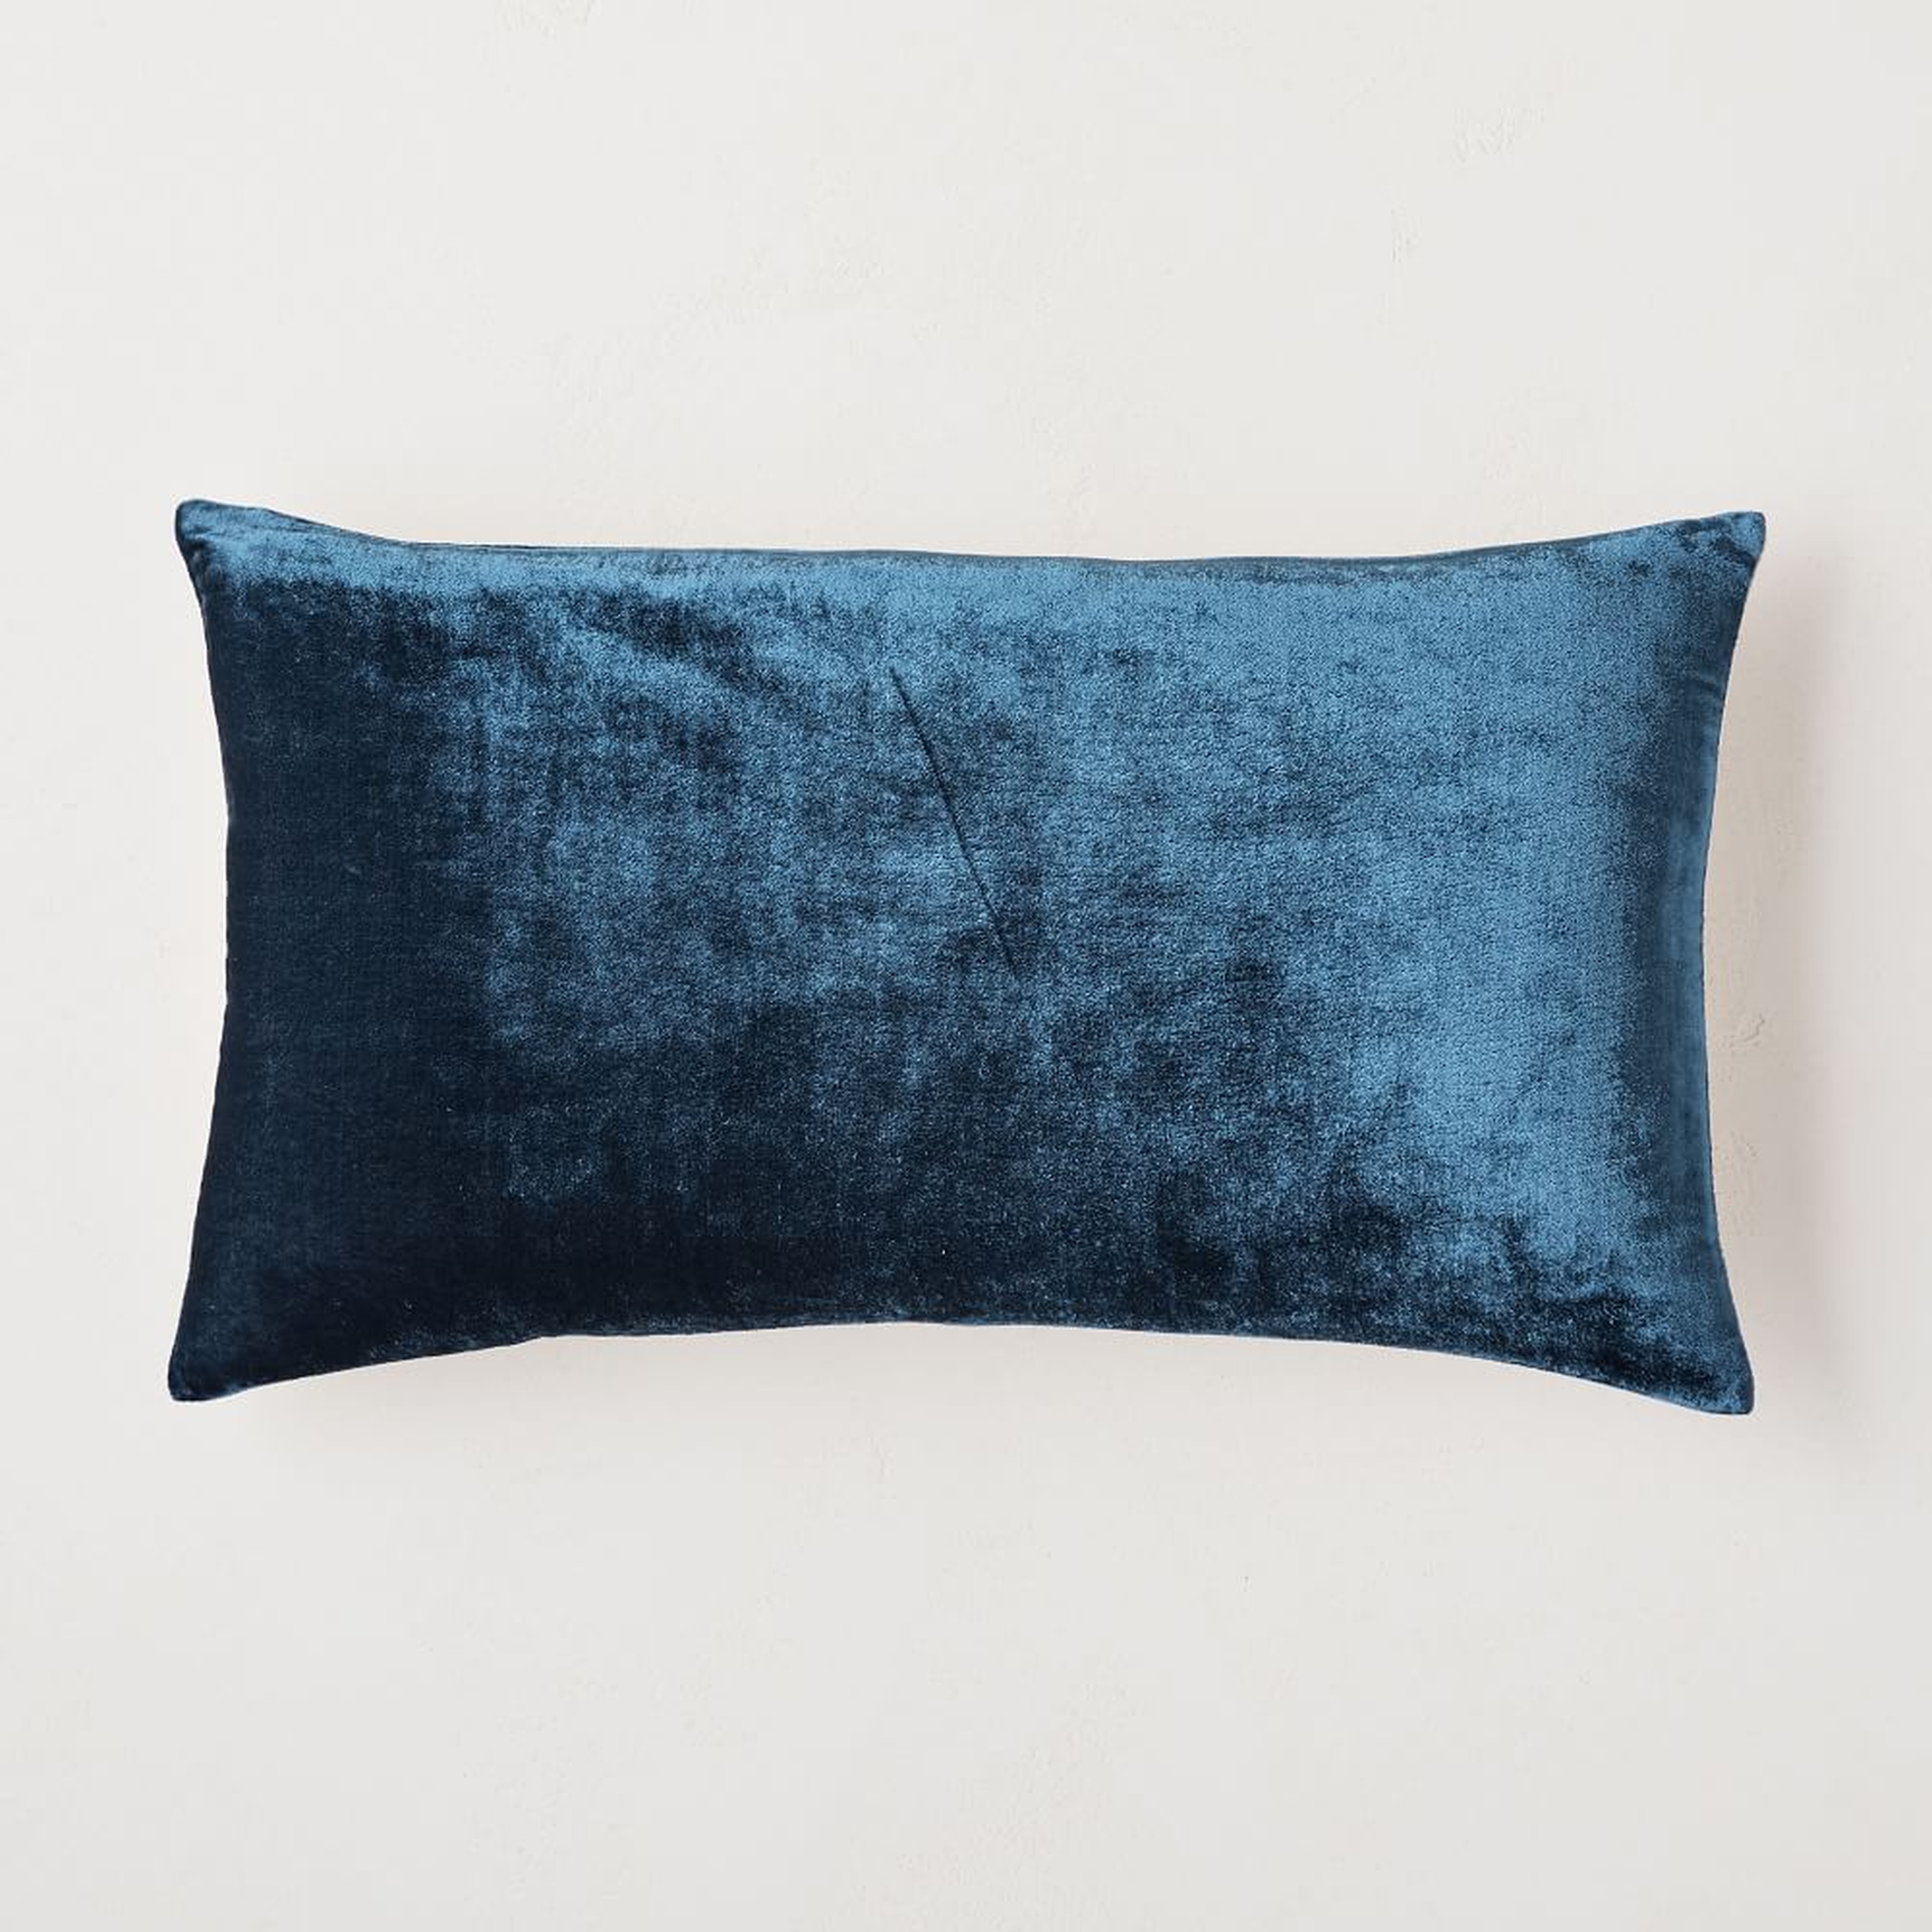 Lush Velvet Pillow Cover, 12"x21", Regal Blue - West Elm